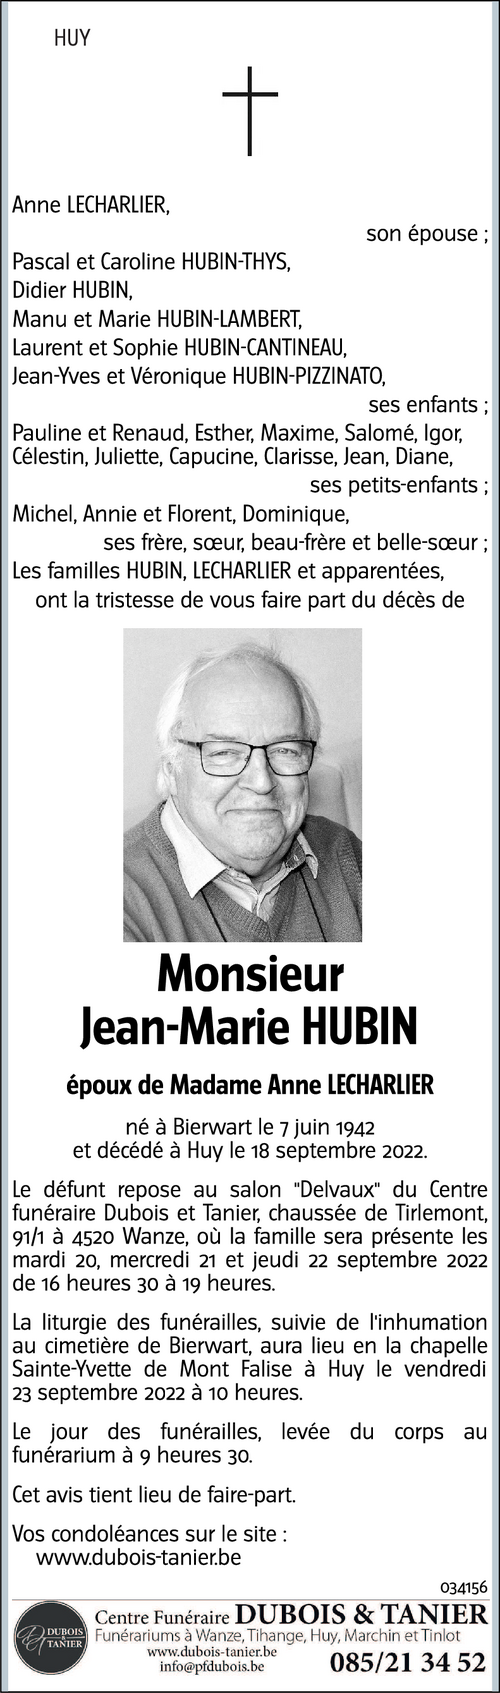 Jean-Marie HUBIN